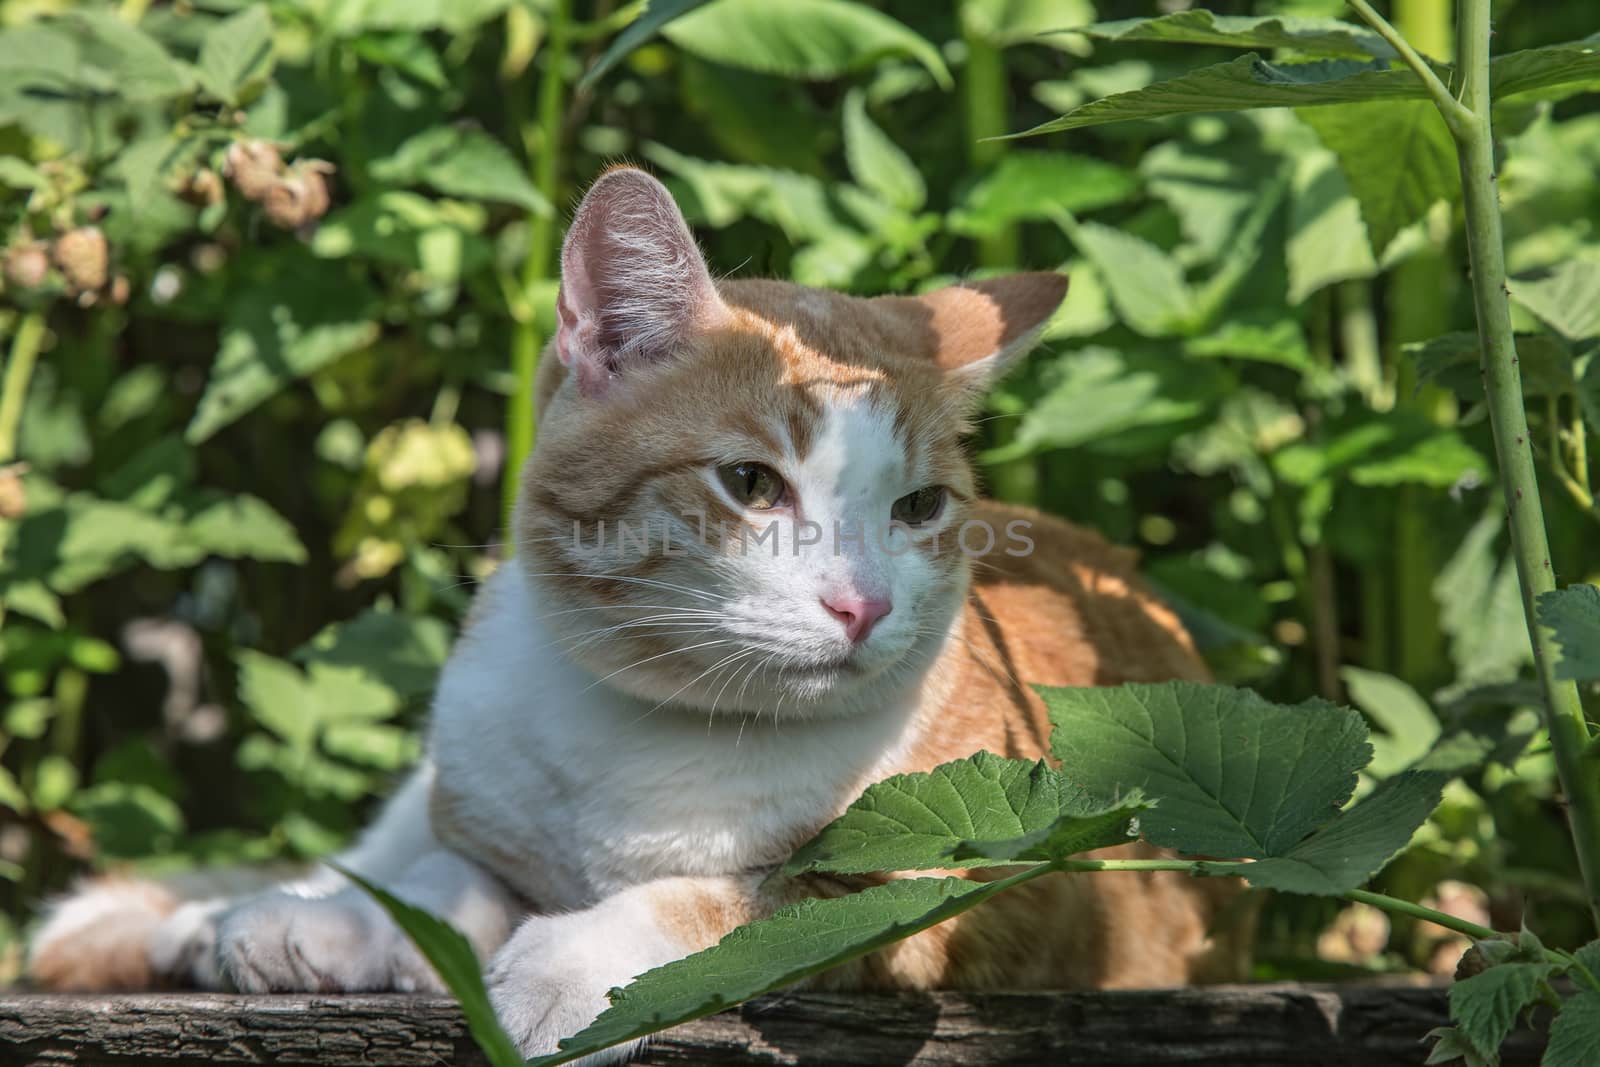 The red cat lies among green vegetation